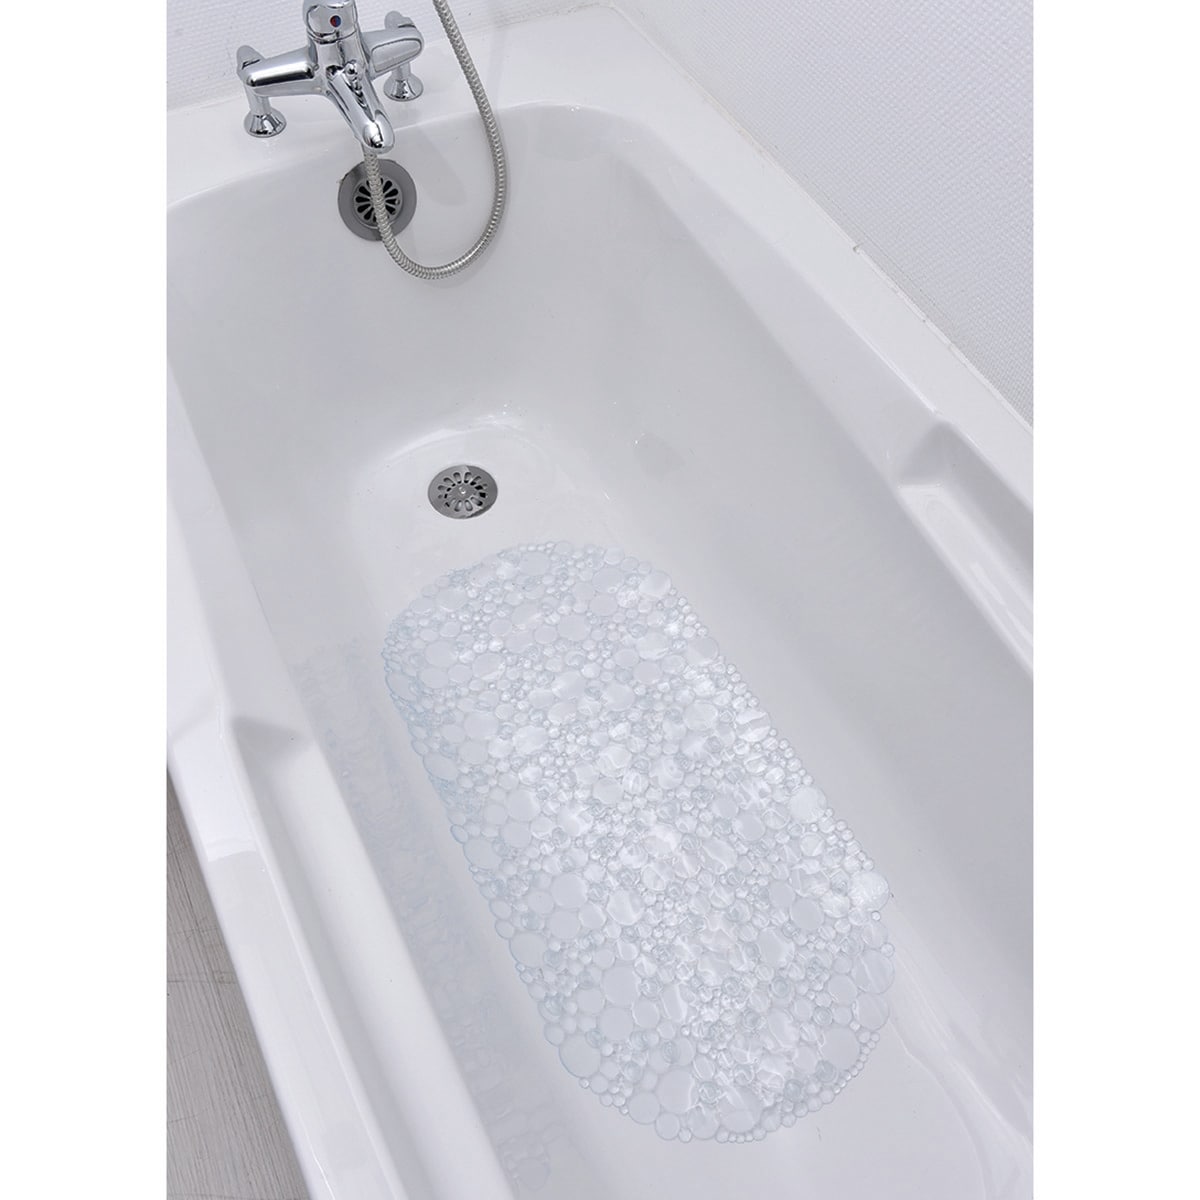 Bubbles Non-Slip Oval Bathtub Mat 28 L x 15 W - On Sale - Bed Bath & Beyond  - 28303138